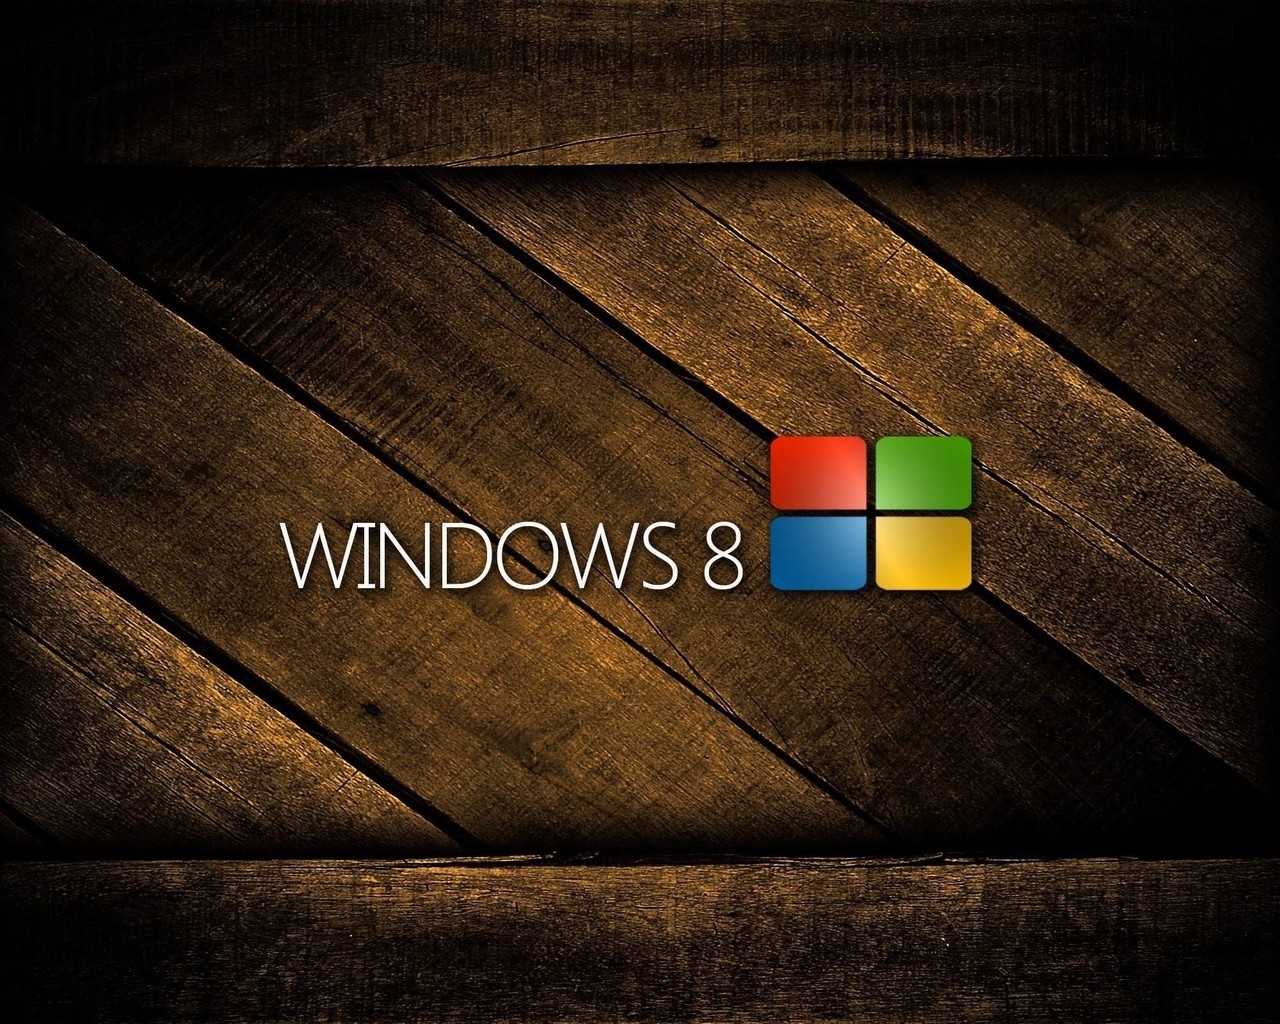 Windows 8 Wood for 1280 x 1024 resolution